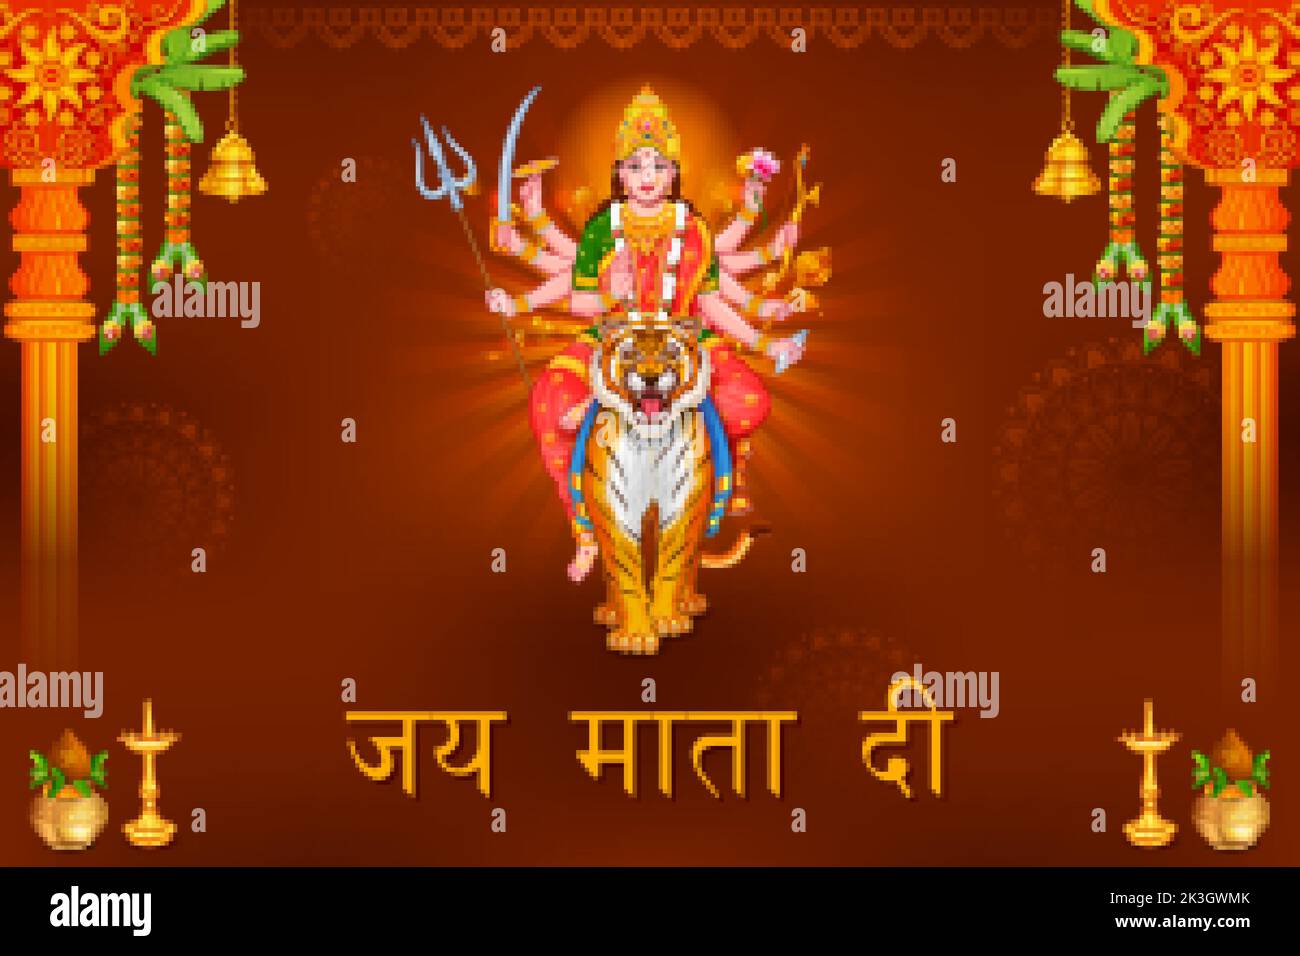 Sherawali Maa in Happy Durga Puja Subh Navratri Indian religious festival background with Hindi text Jai Mata Di means Hail Goddess Stock Vector